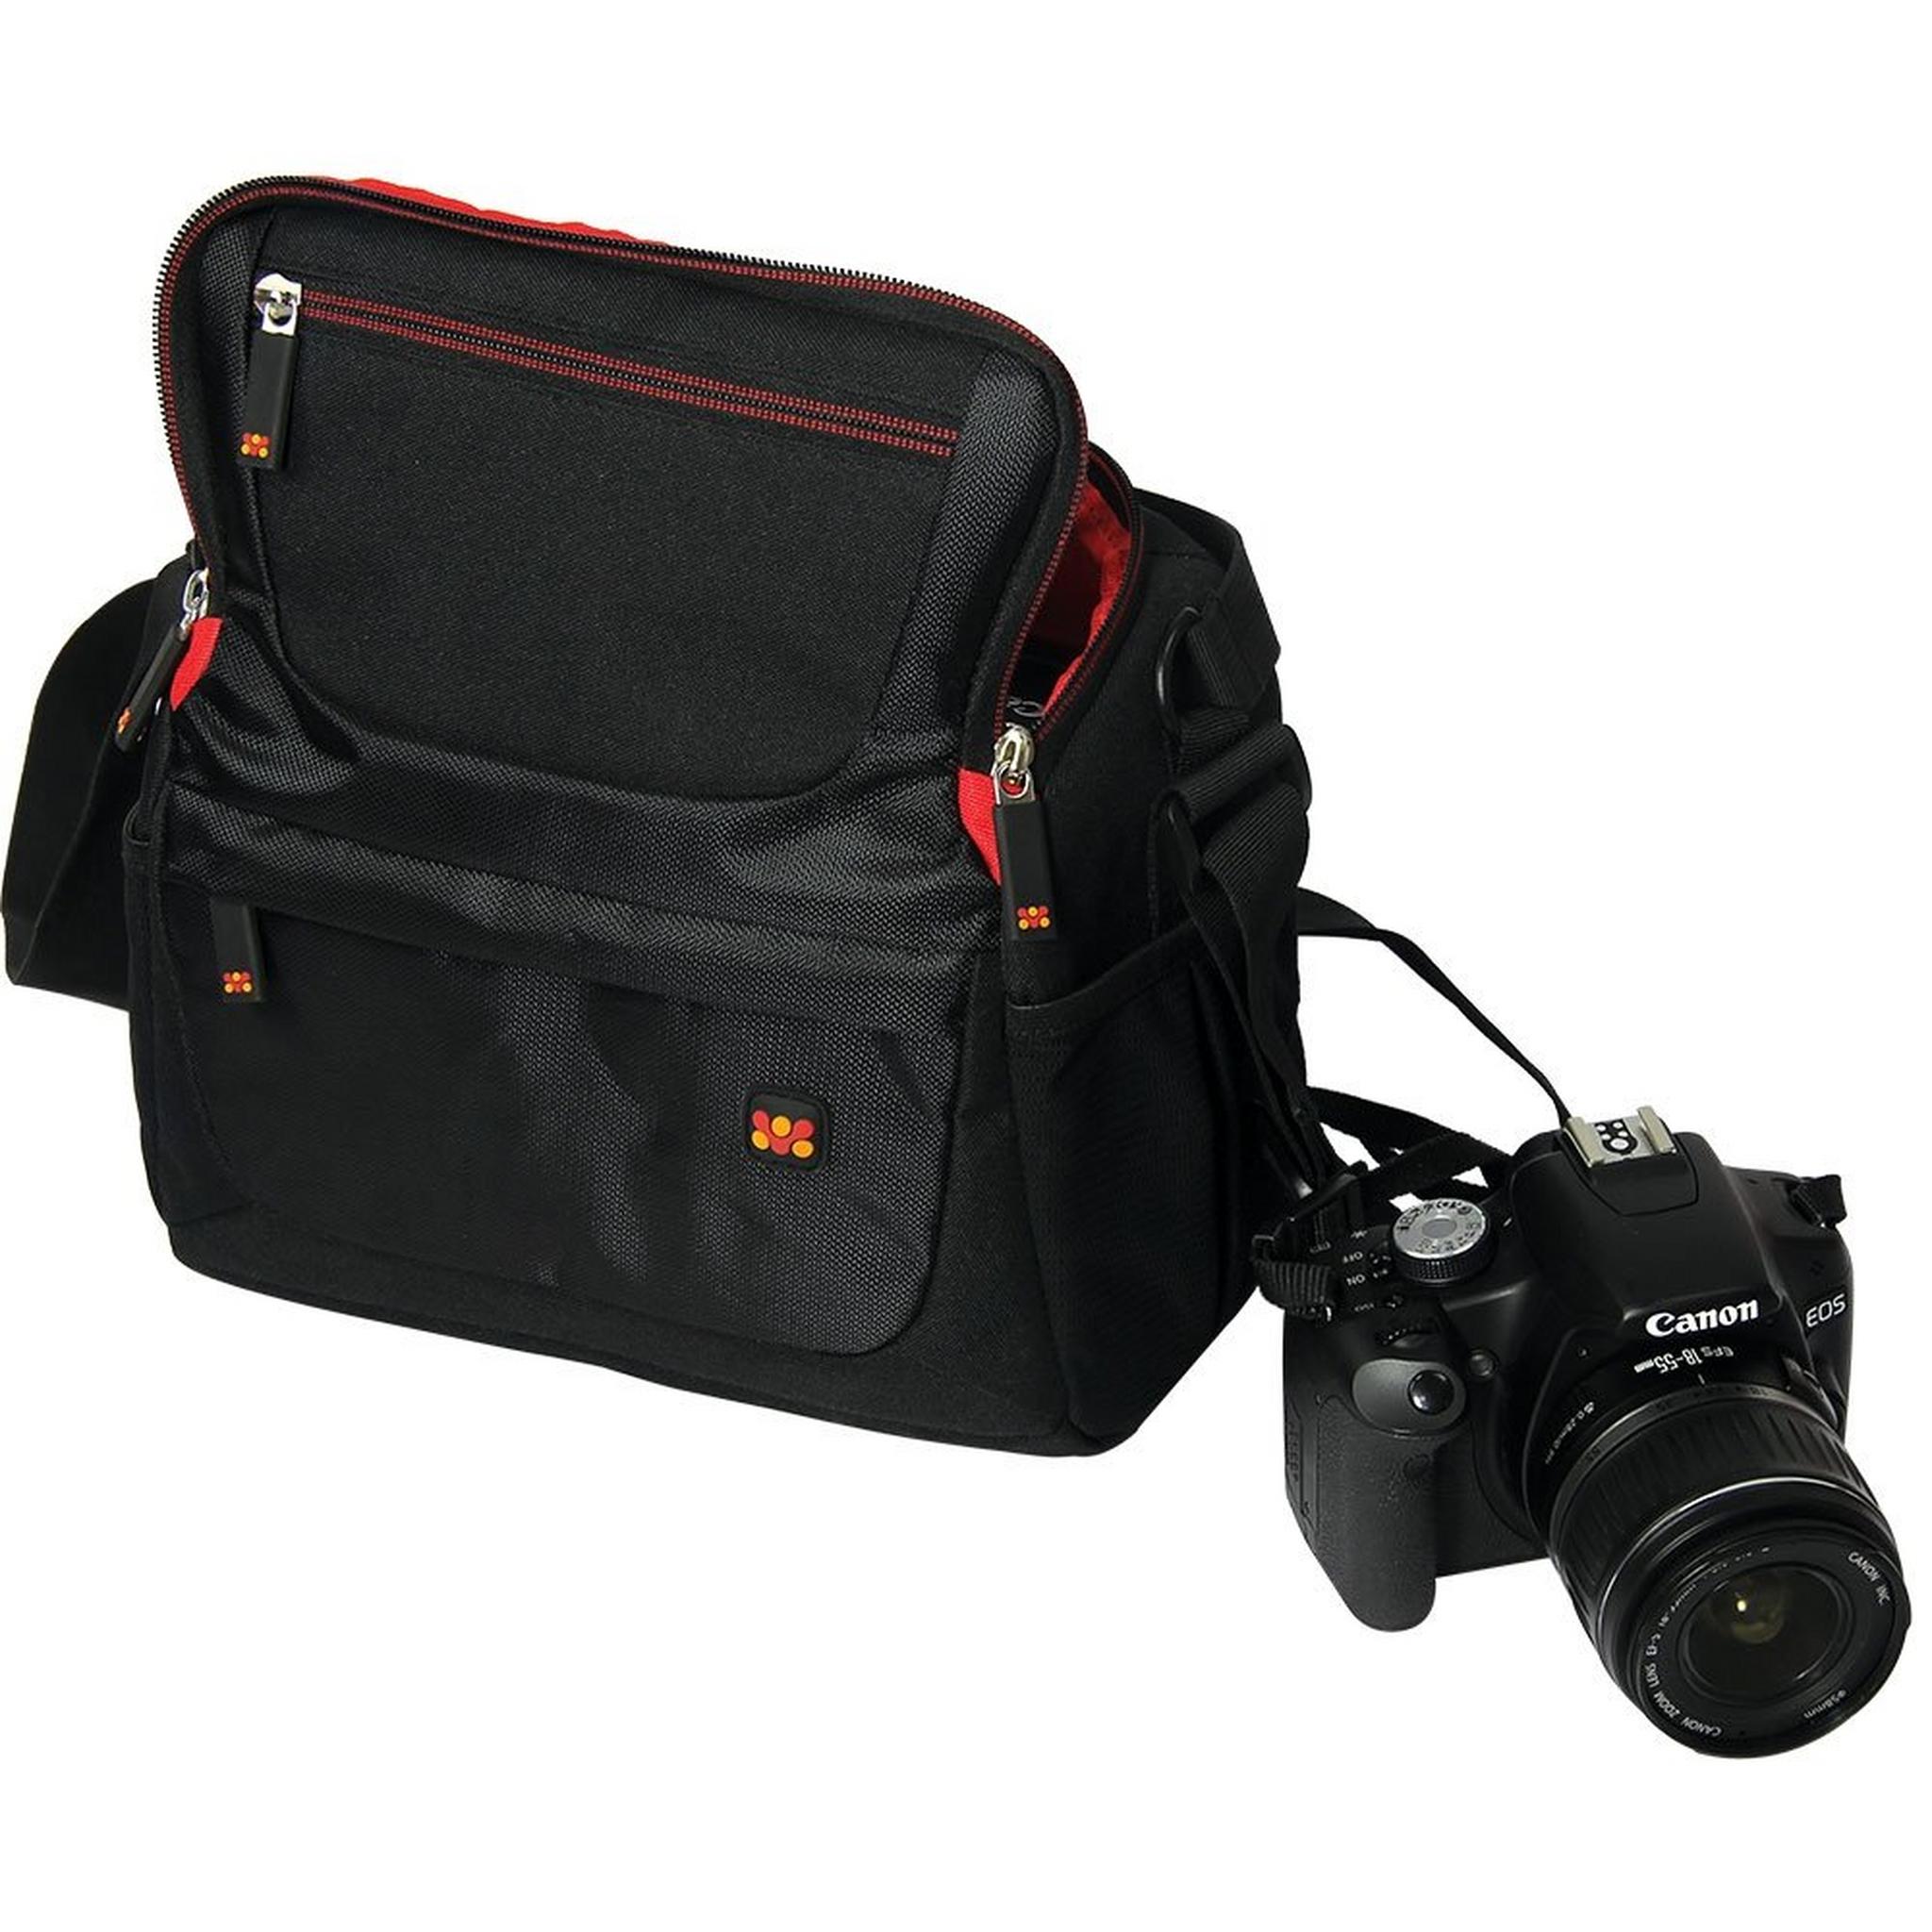 Promate Handypak1-L Waterproof SLR Camera Shoulder Bag